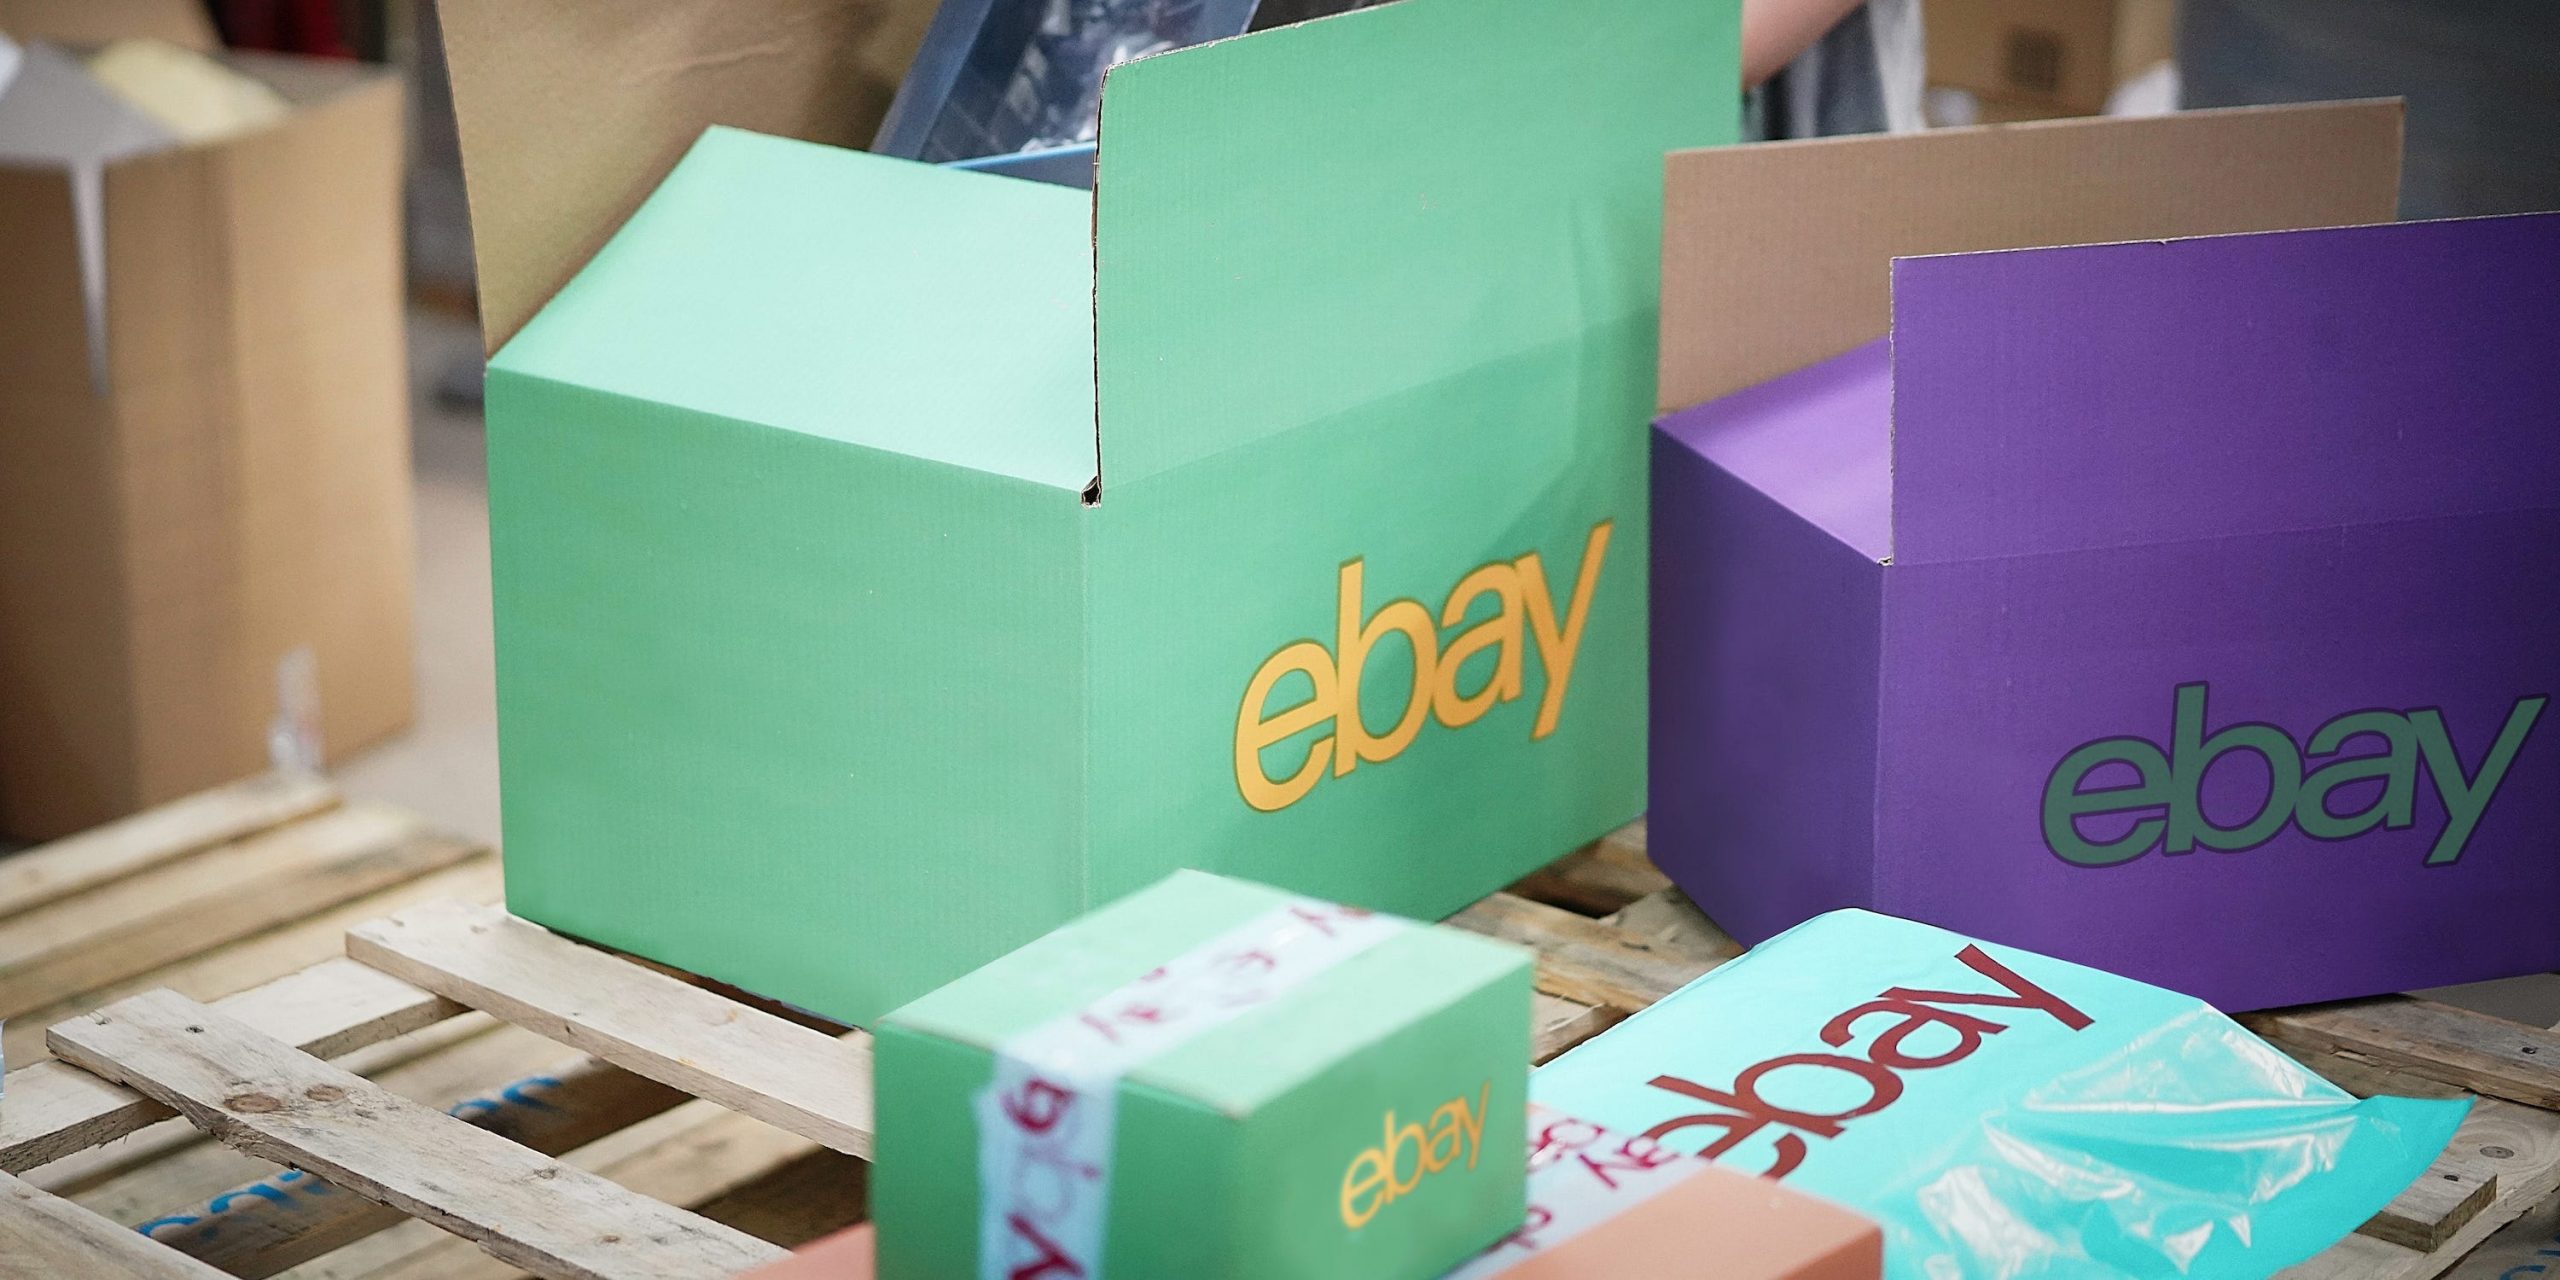 eBay seller business owner boxes warehouse